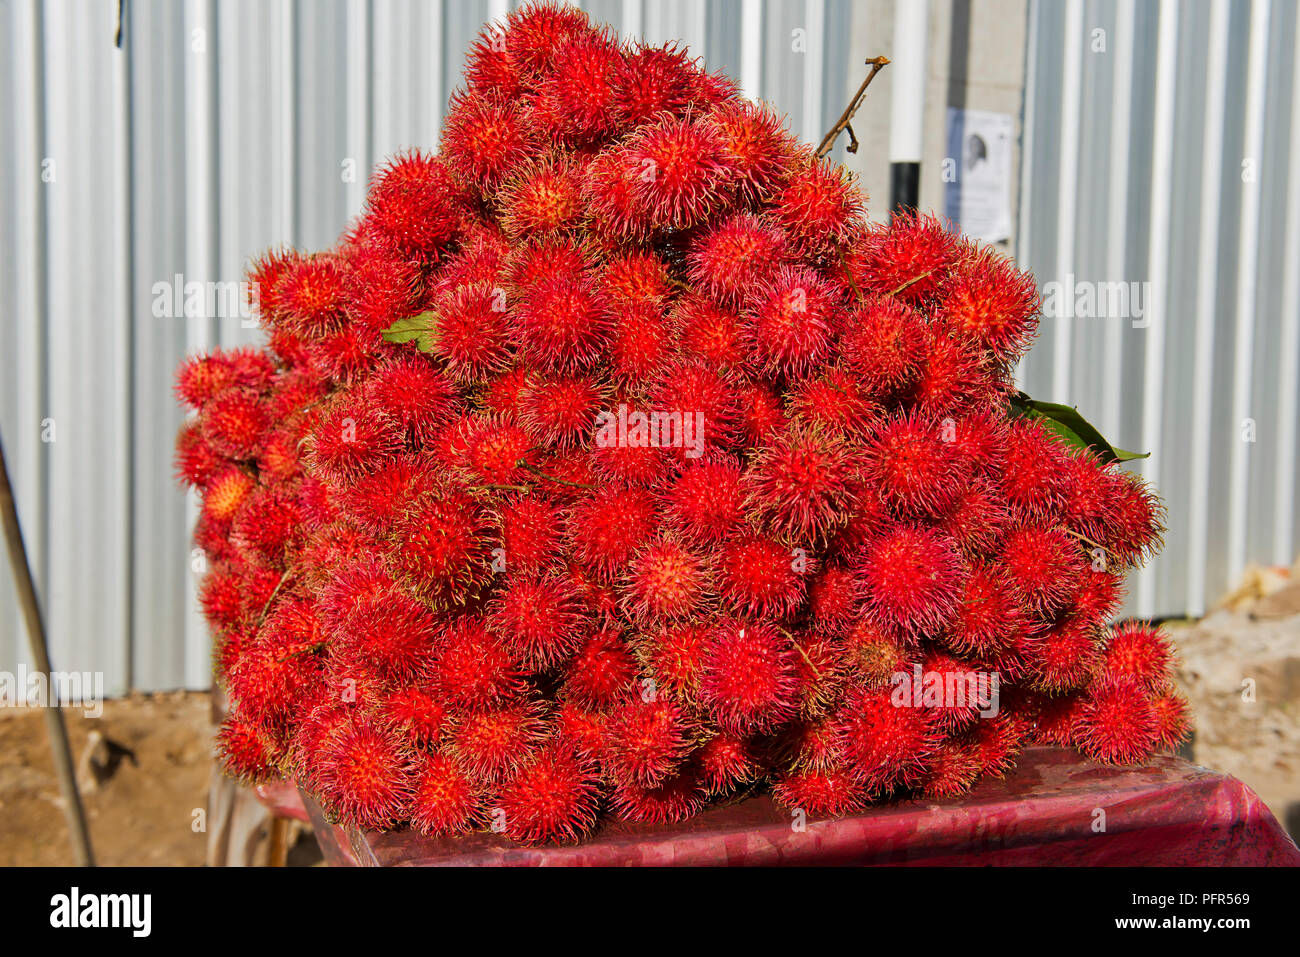 Sri Lanka, Western Province, Colombo, Ja-Ela, heap of rambutan fruit Stock Photo